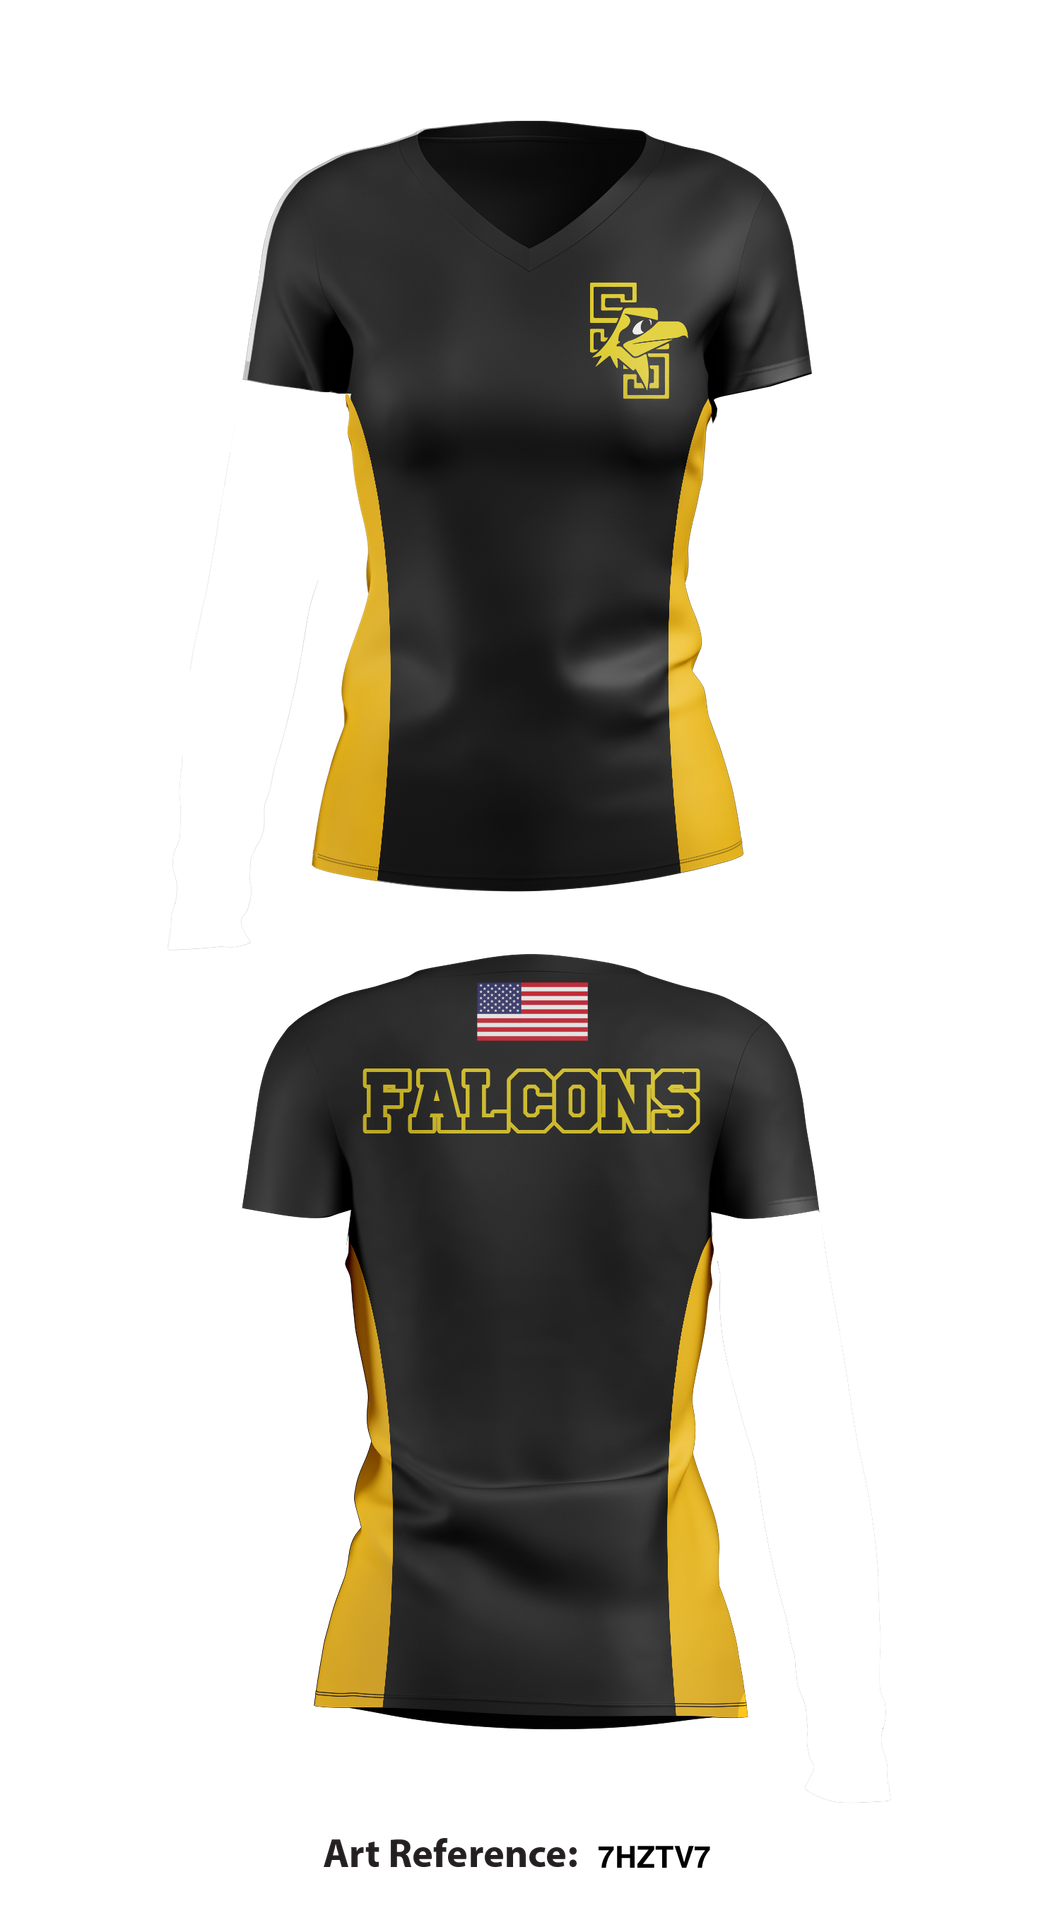 Falcons 75400730 Women's Short Sleeve V-neck Shirt - 1